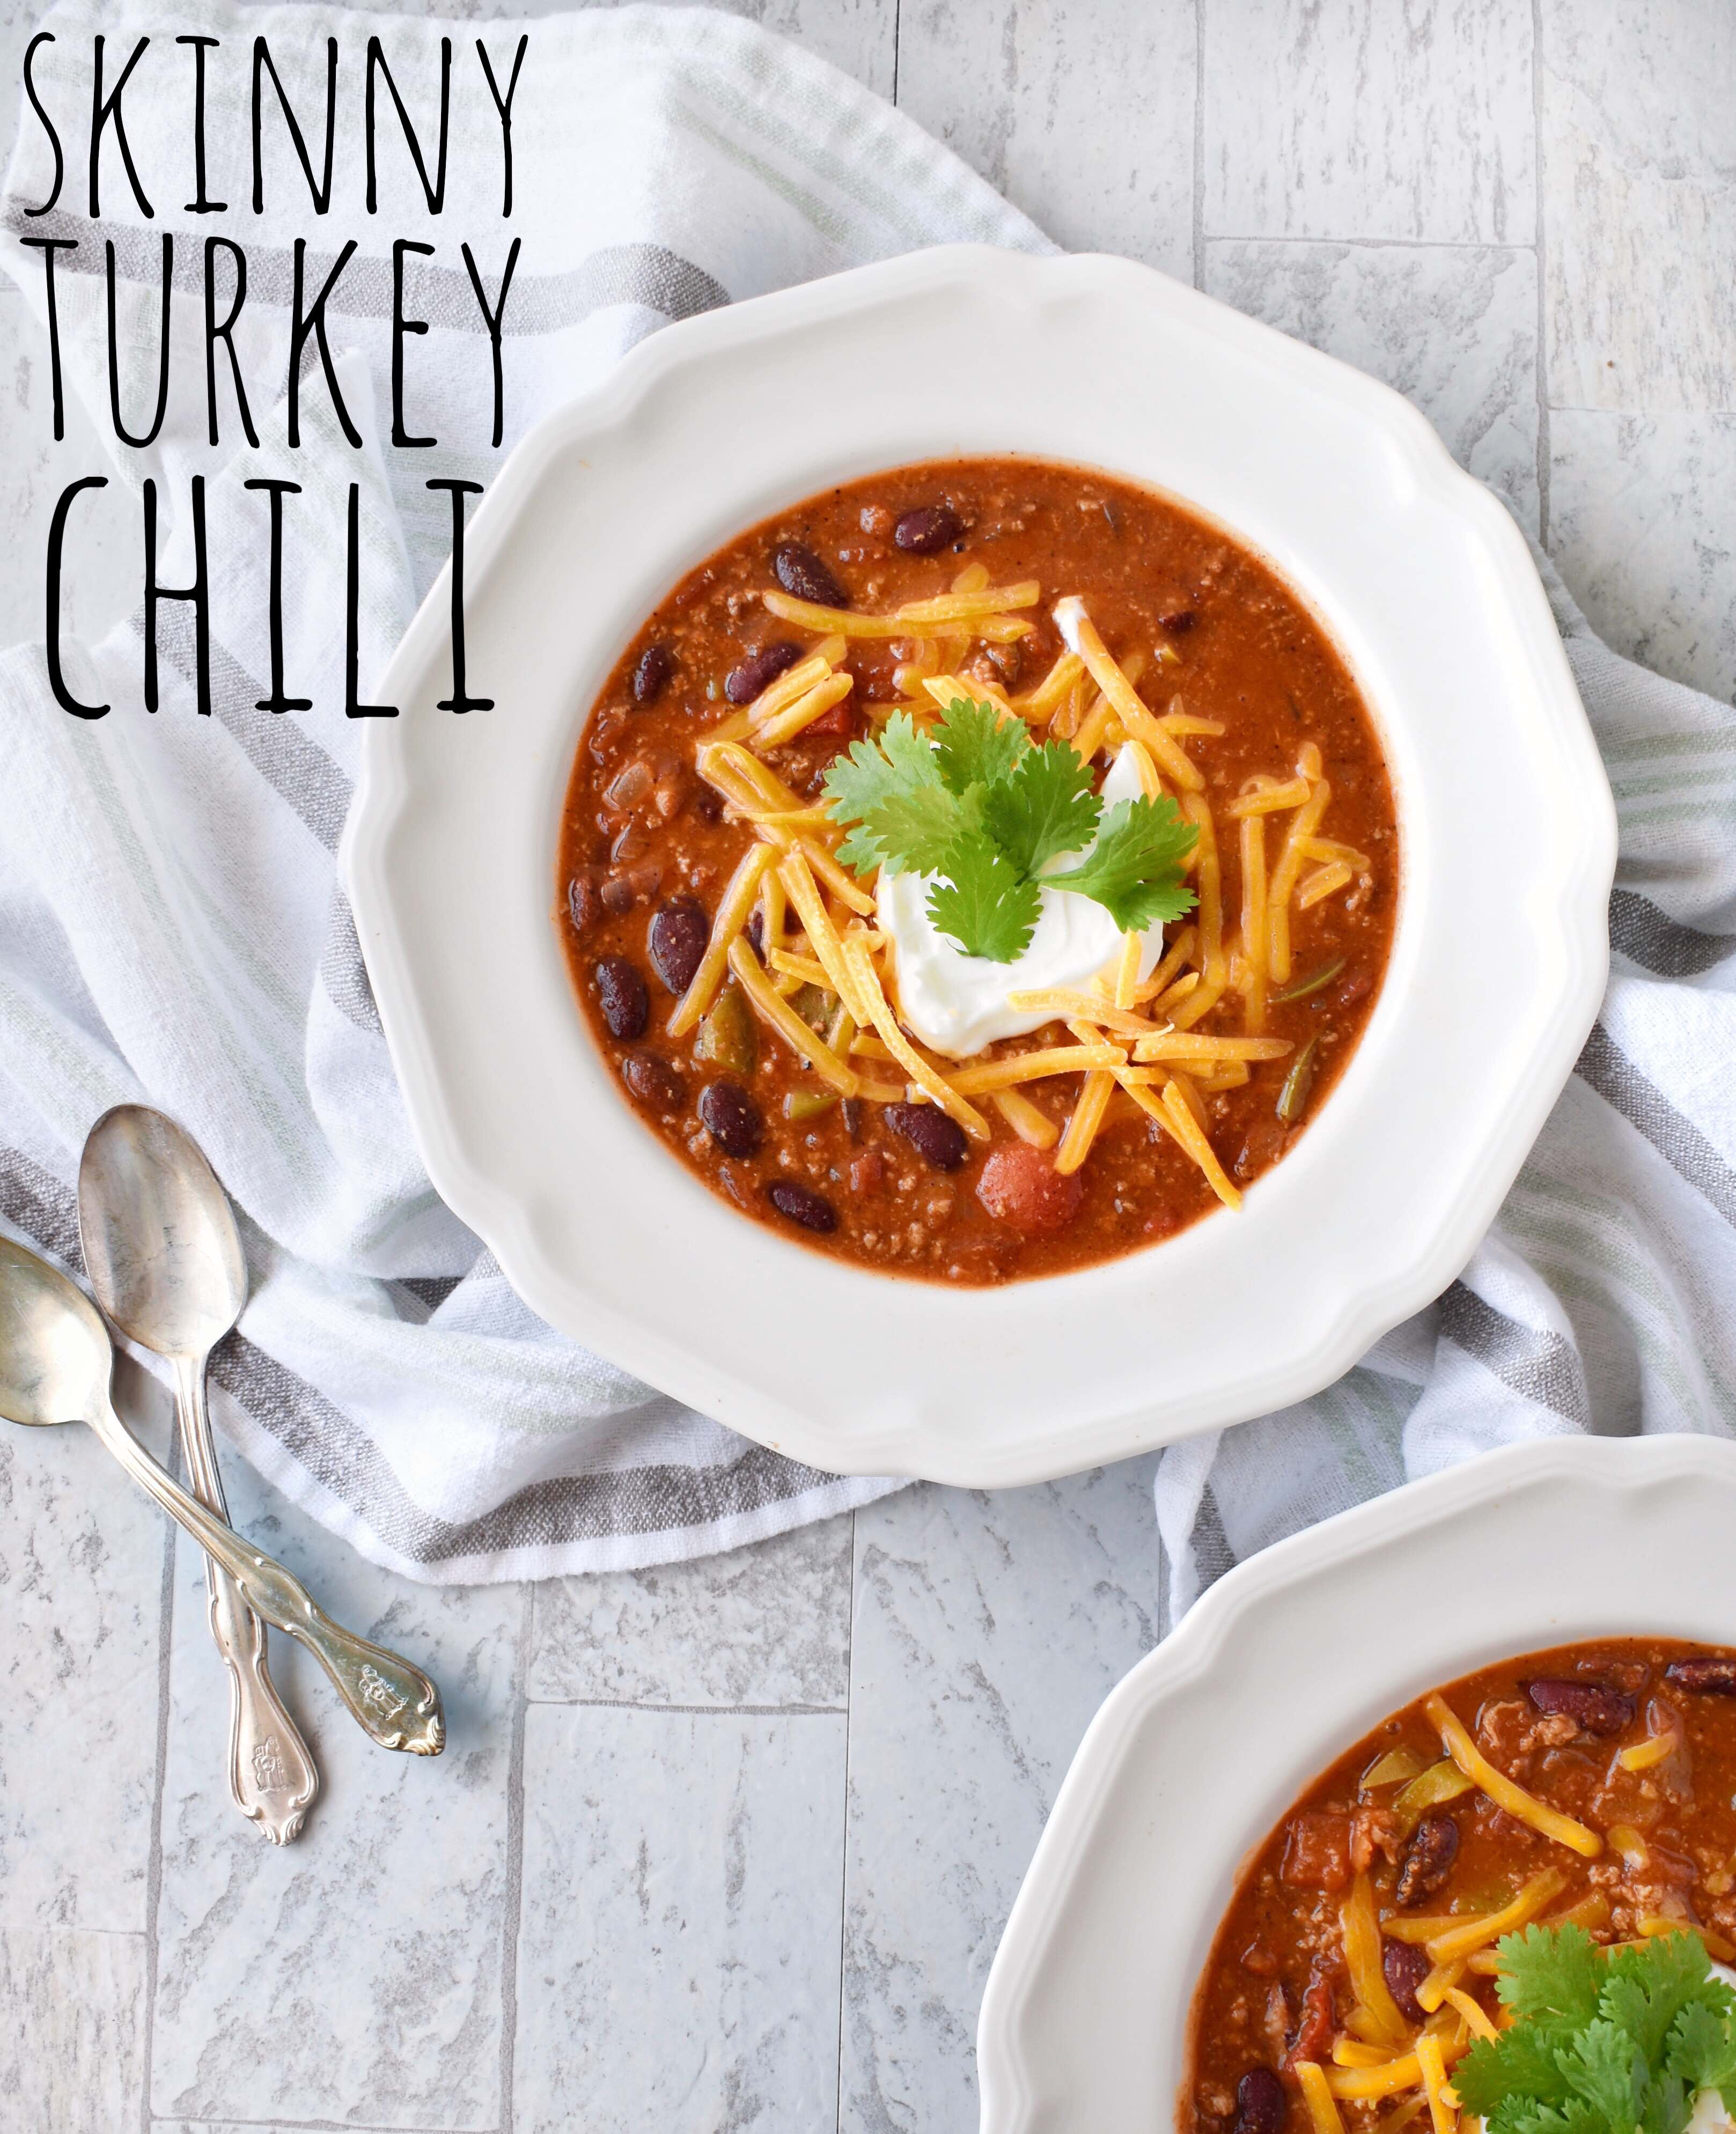 Try our Skinny Turkey Chili recipe